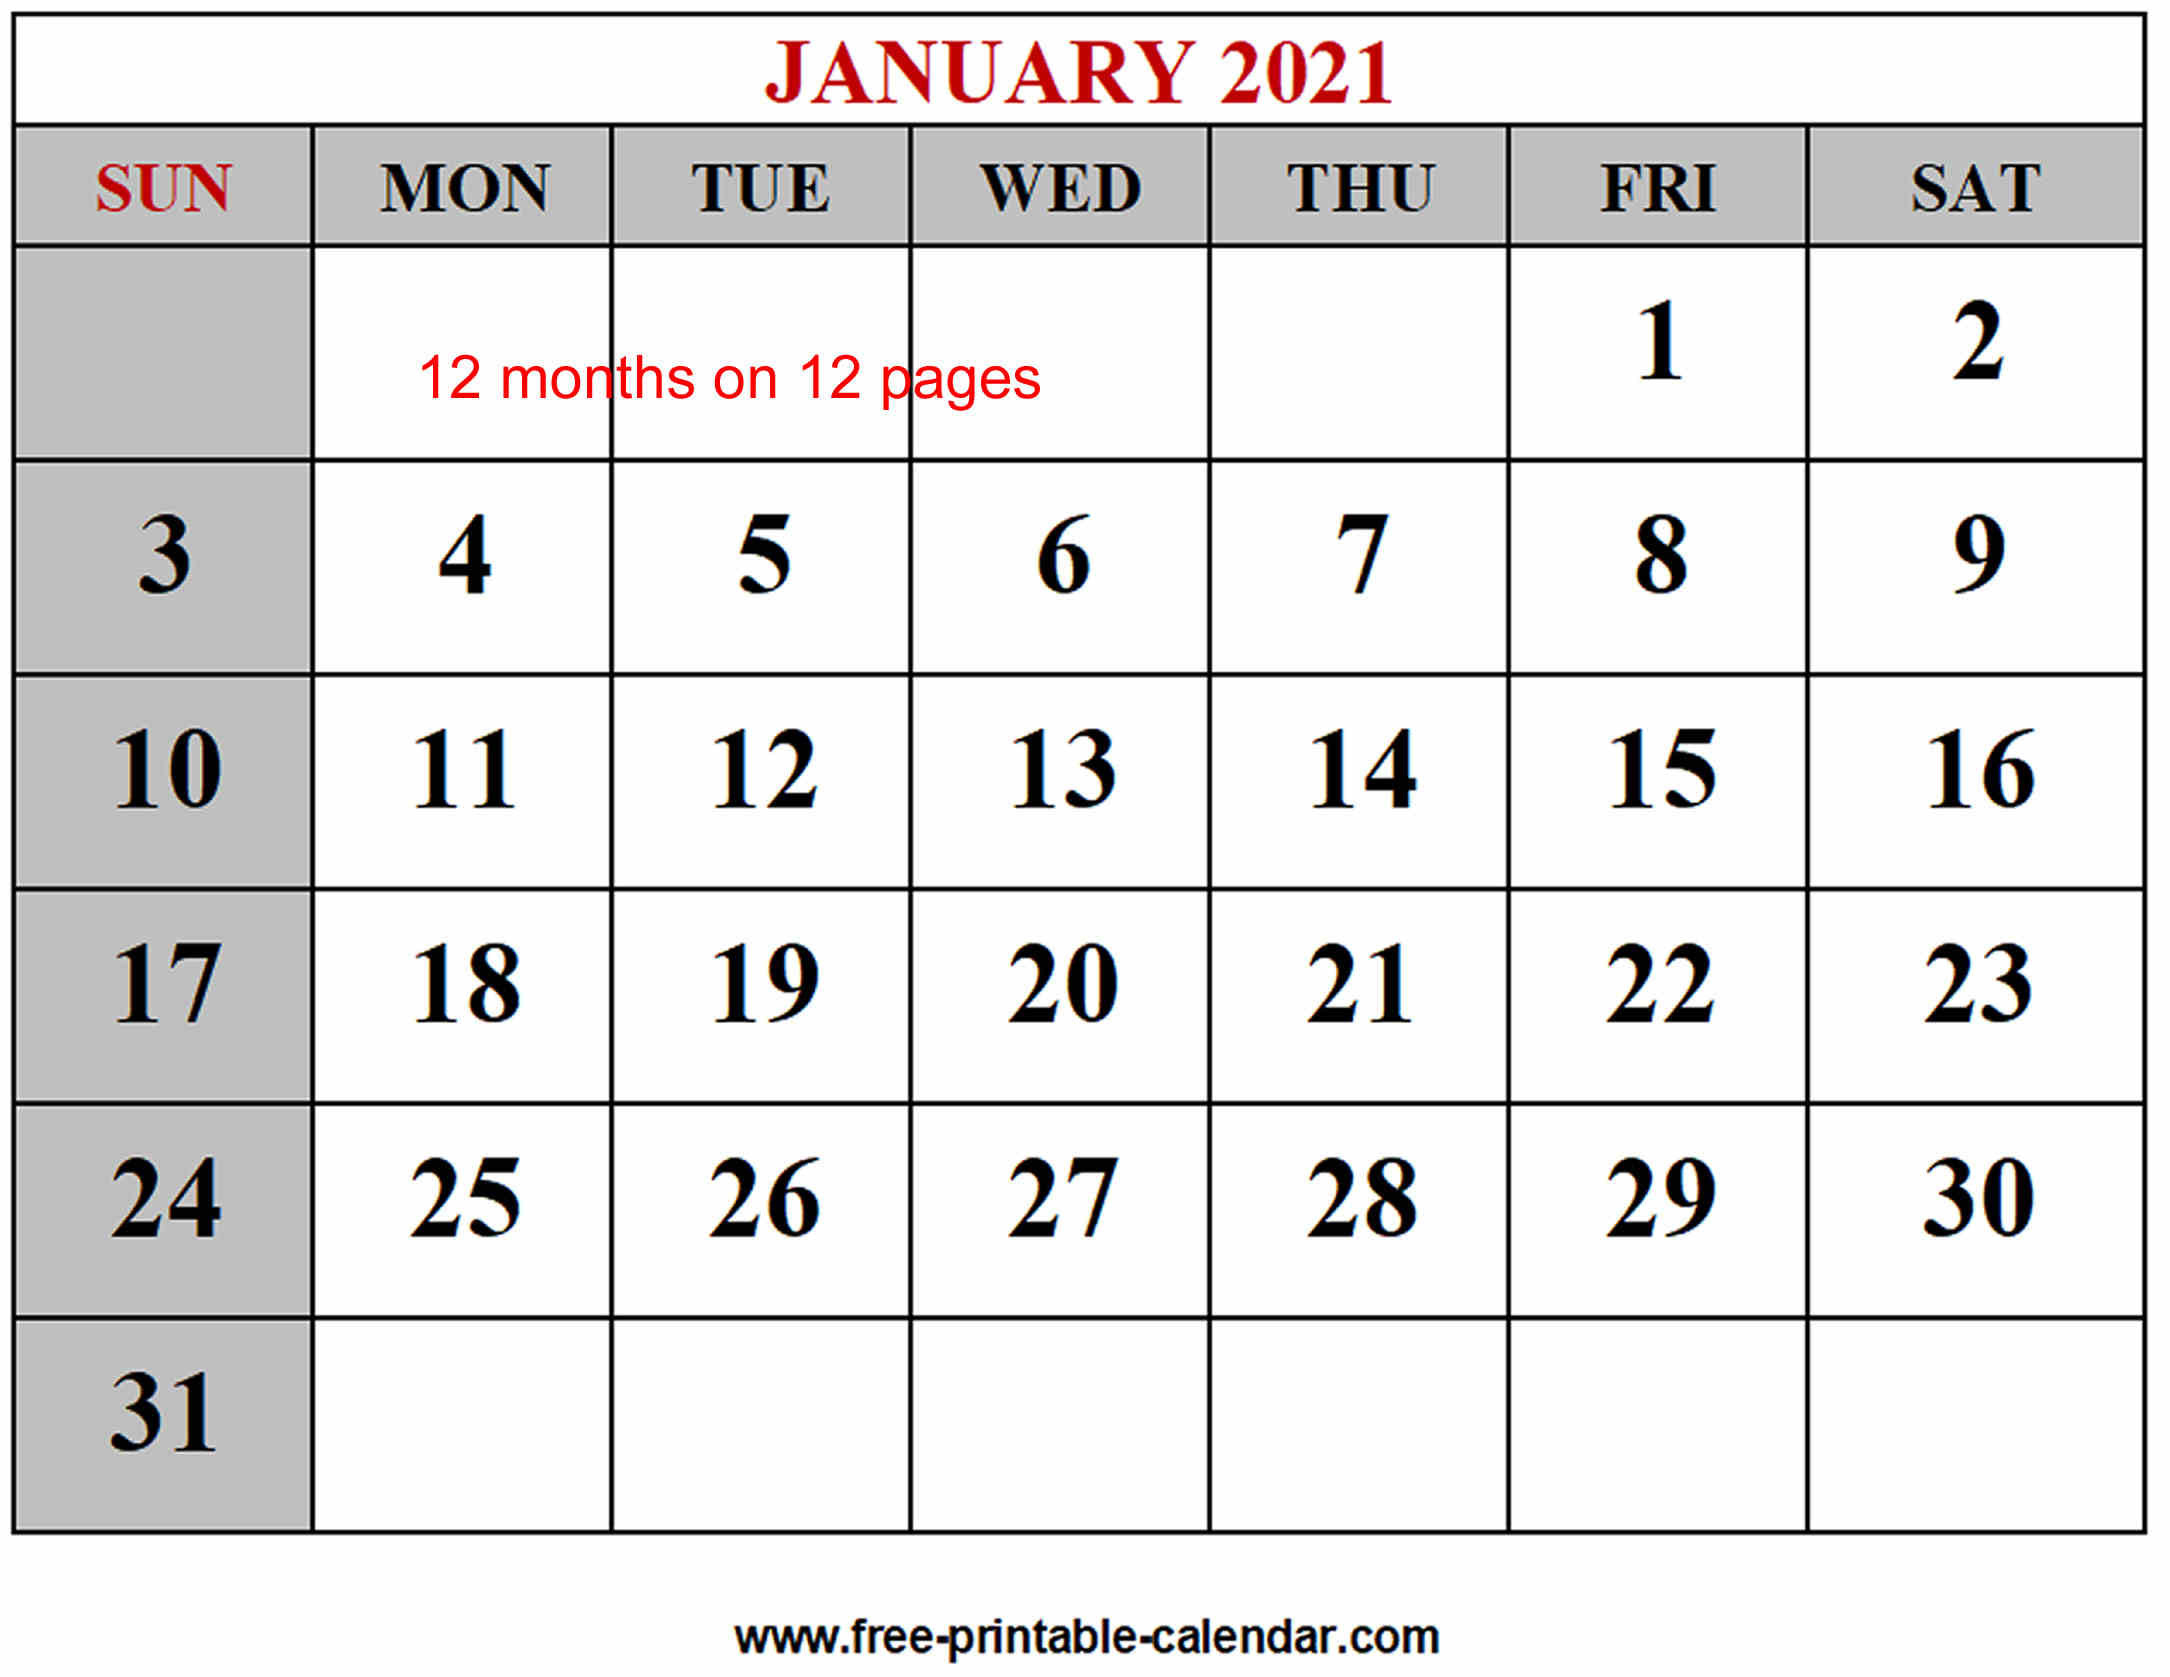 Year 2021 Calendar Templates - Free-Printable-Calendar-Calendar Monthly 2021